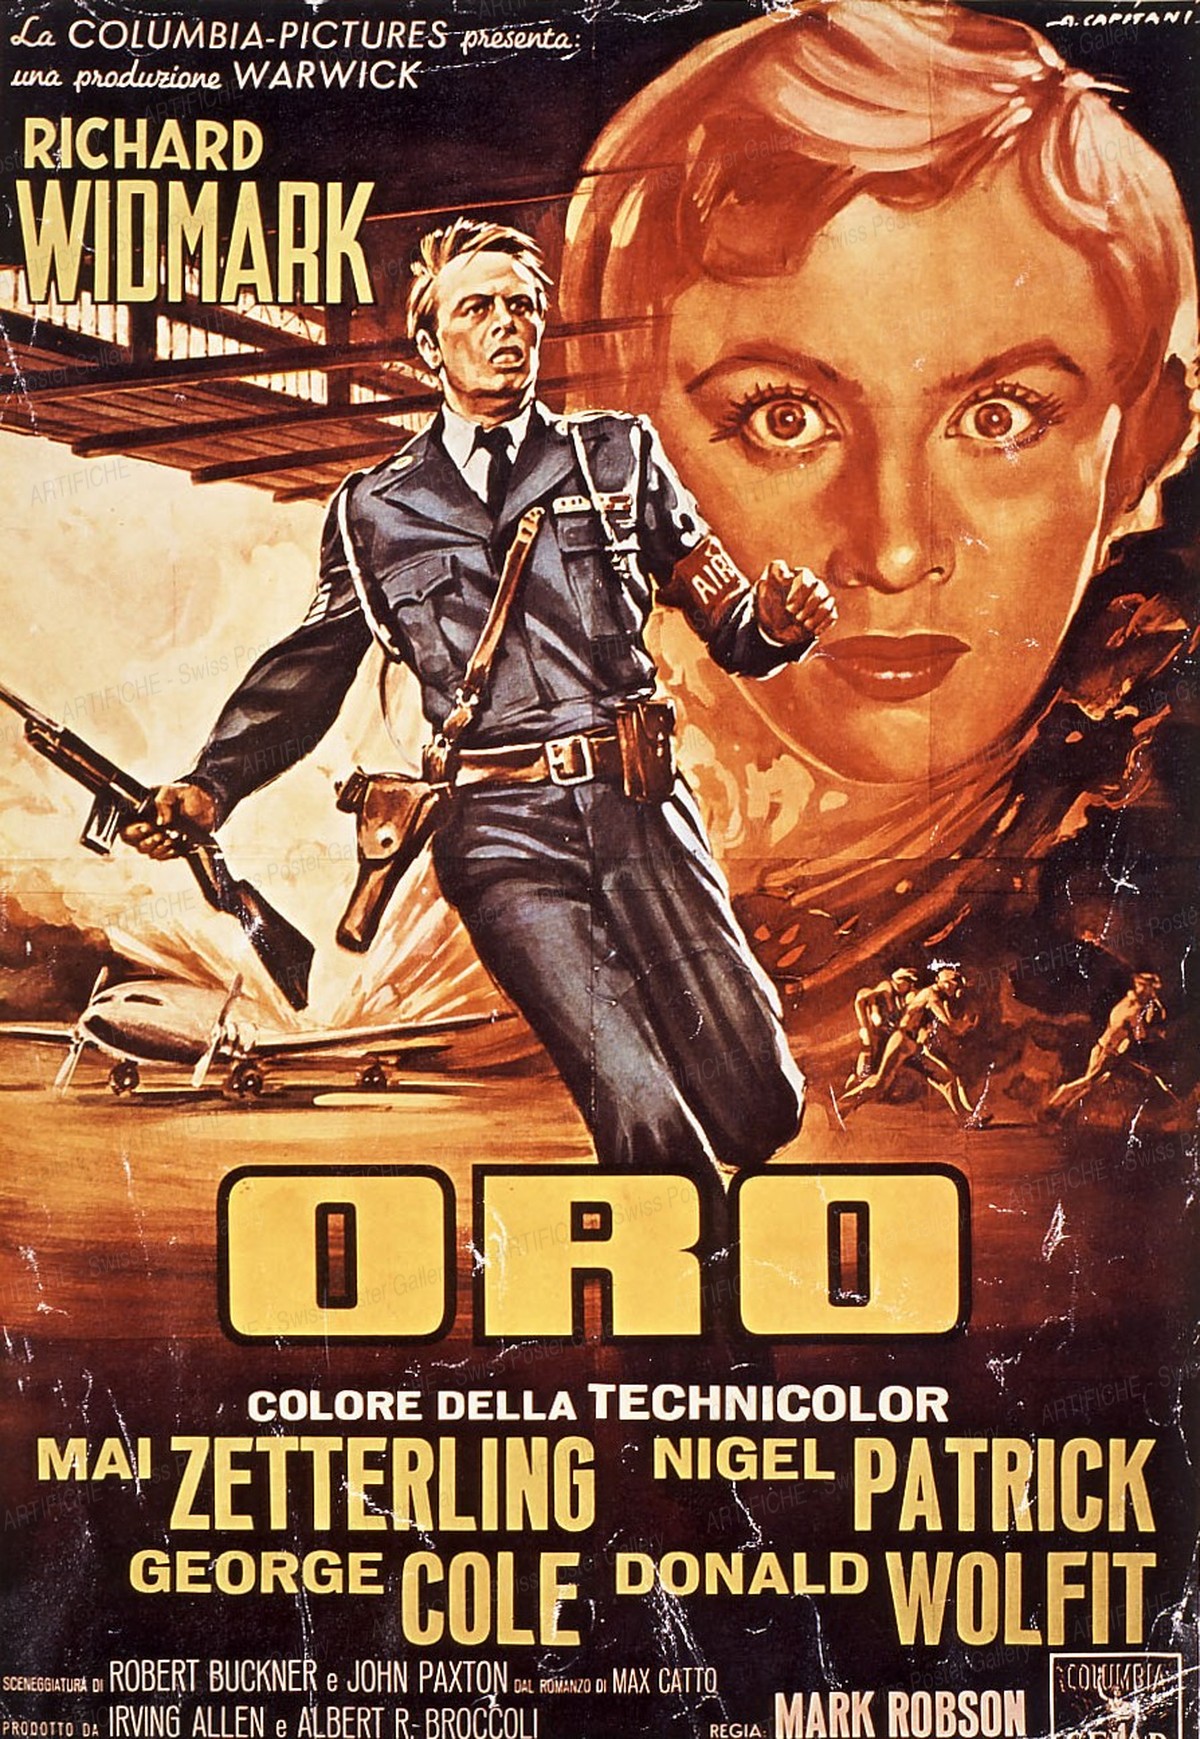 Film „ORO“ – Capitani – Richard Widmark – by Albert R. Brokkoli, Artist unknown